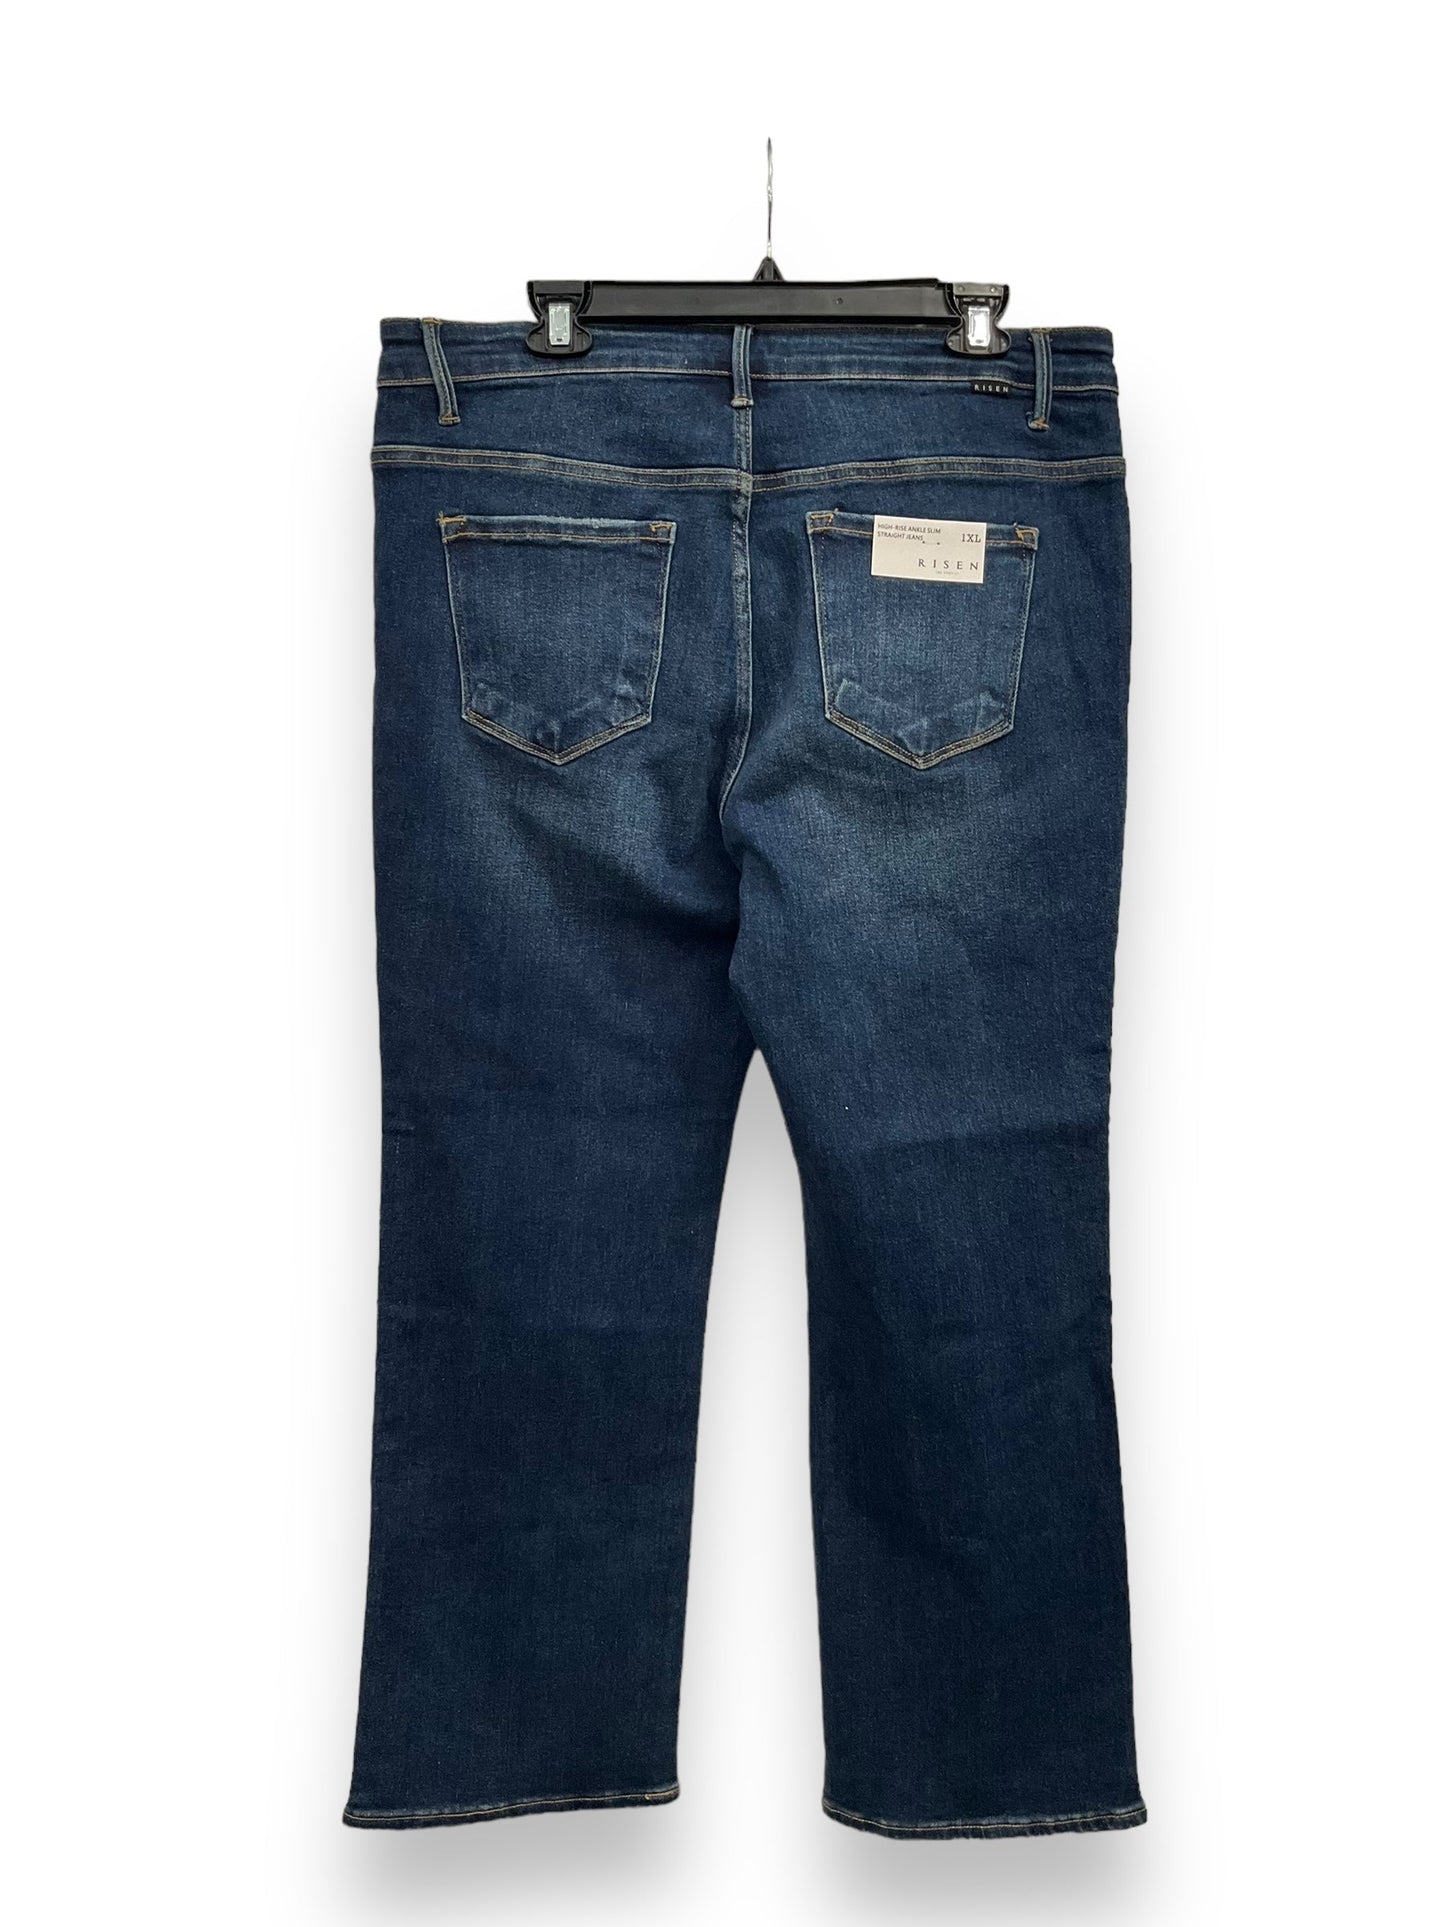 Blue Denim Jeans Cropped Risen, Size 1x